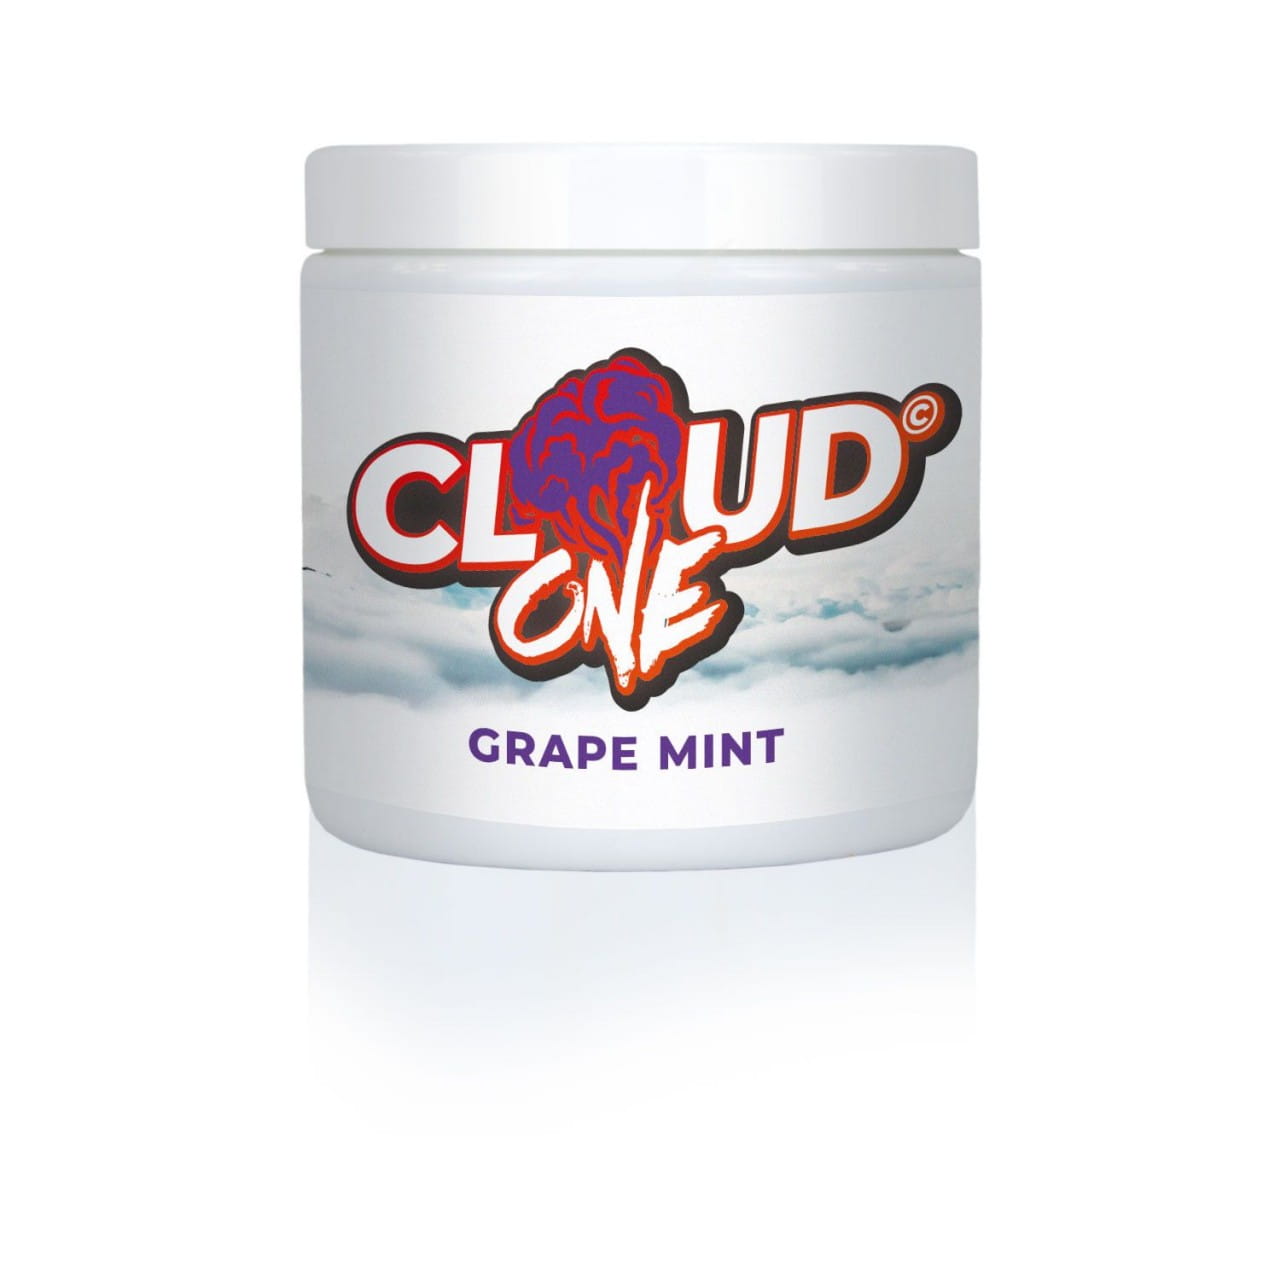 Cloud One - Grape Mint 200 g unter ohne Angabe